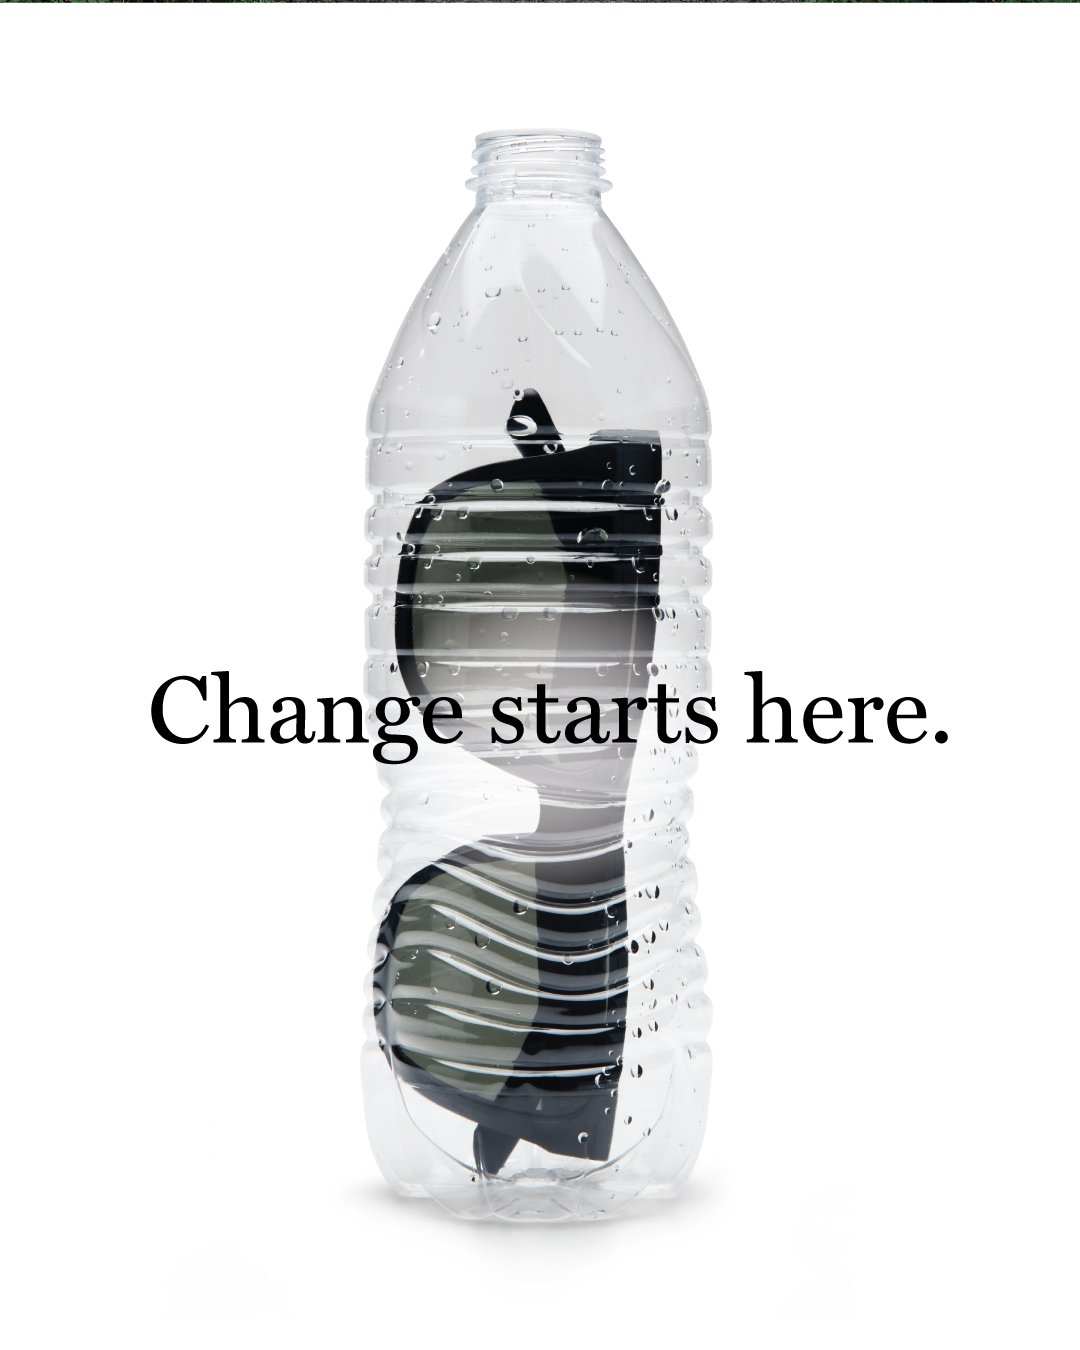 Change starts here.